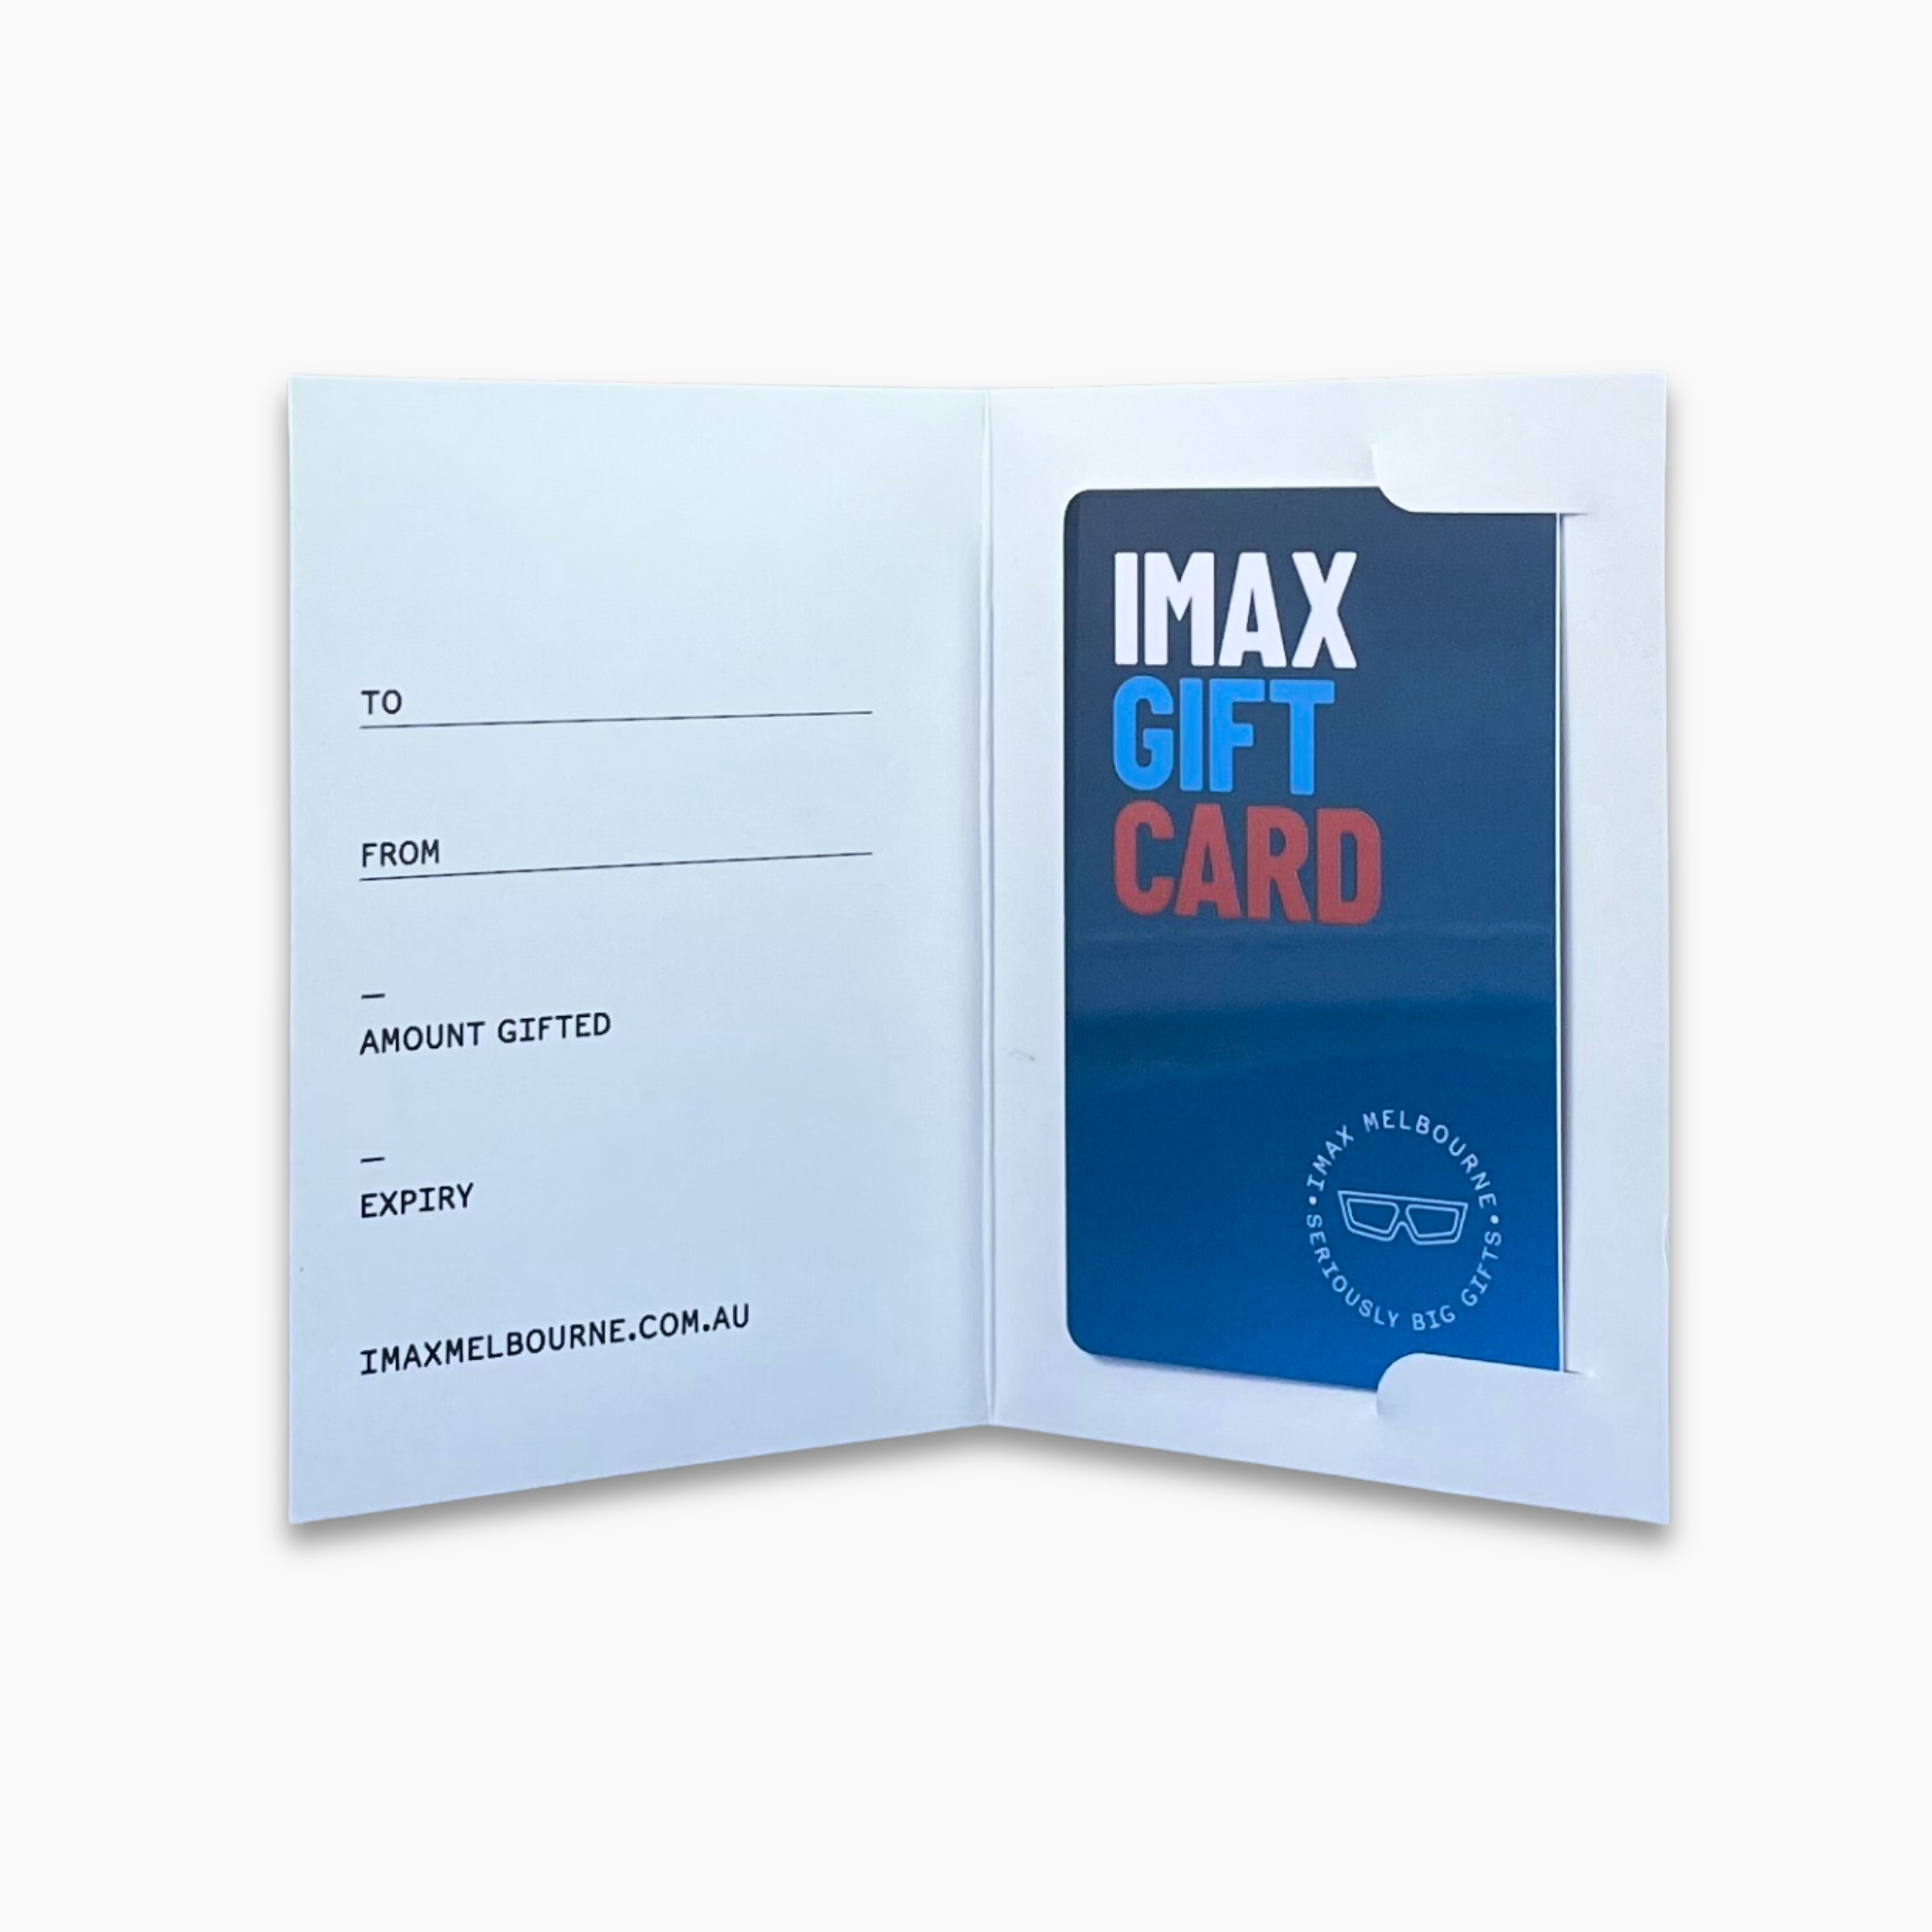 IMAX Gift Card